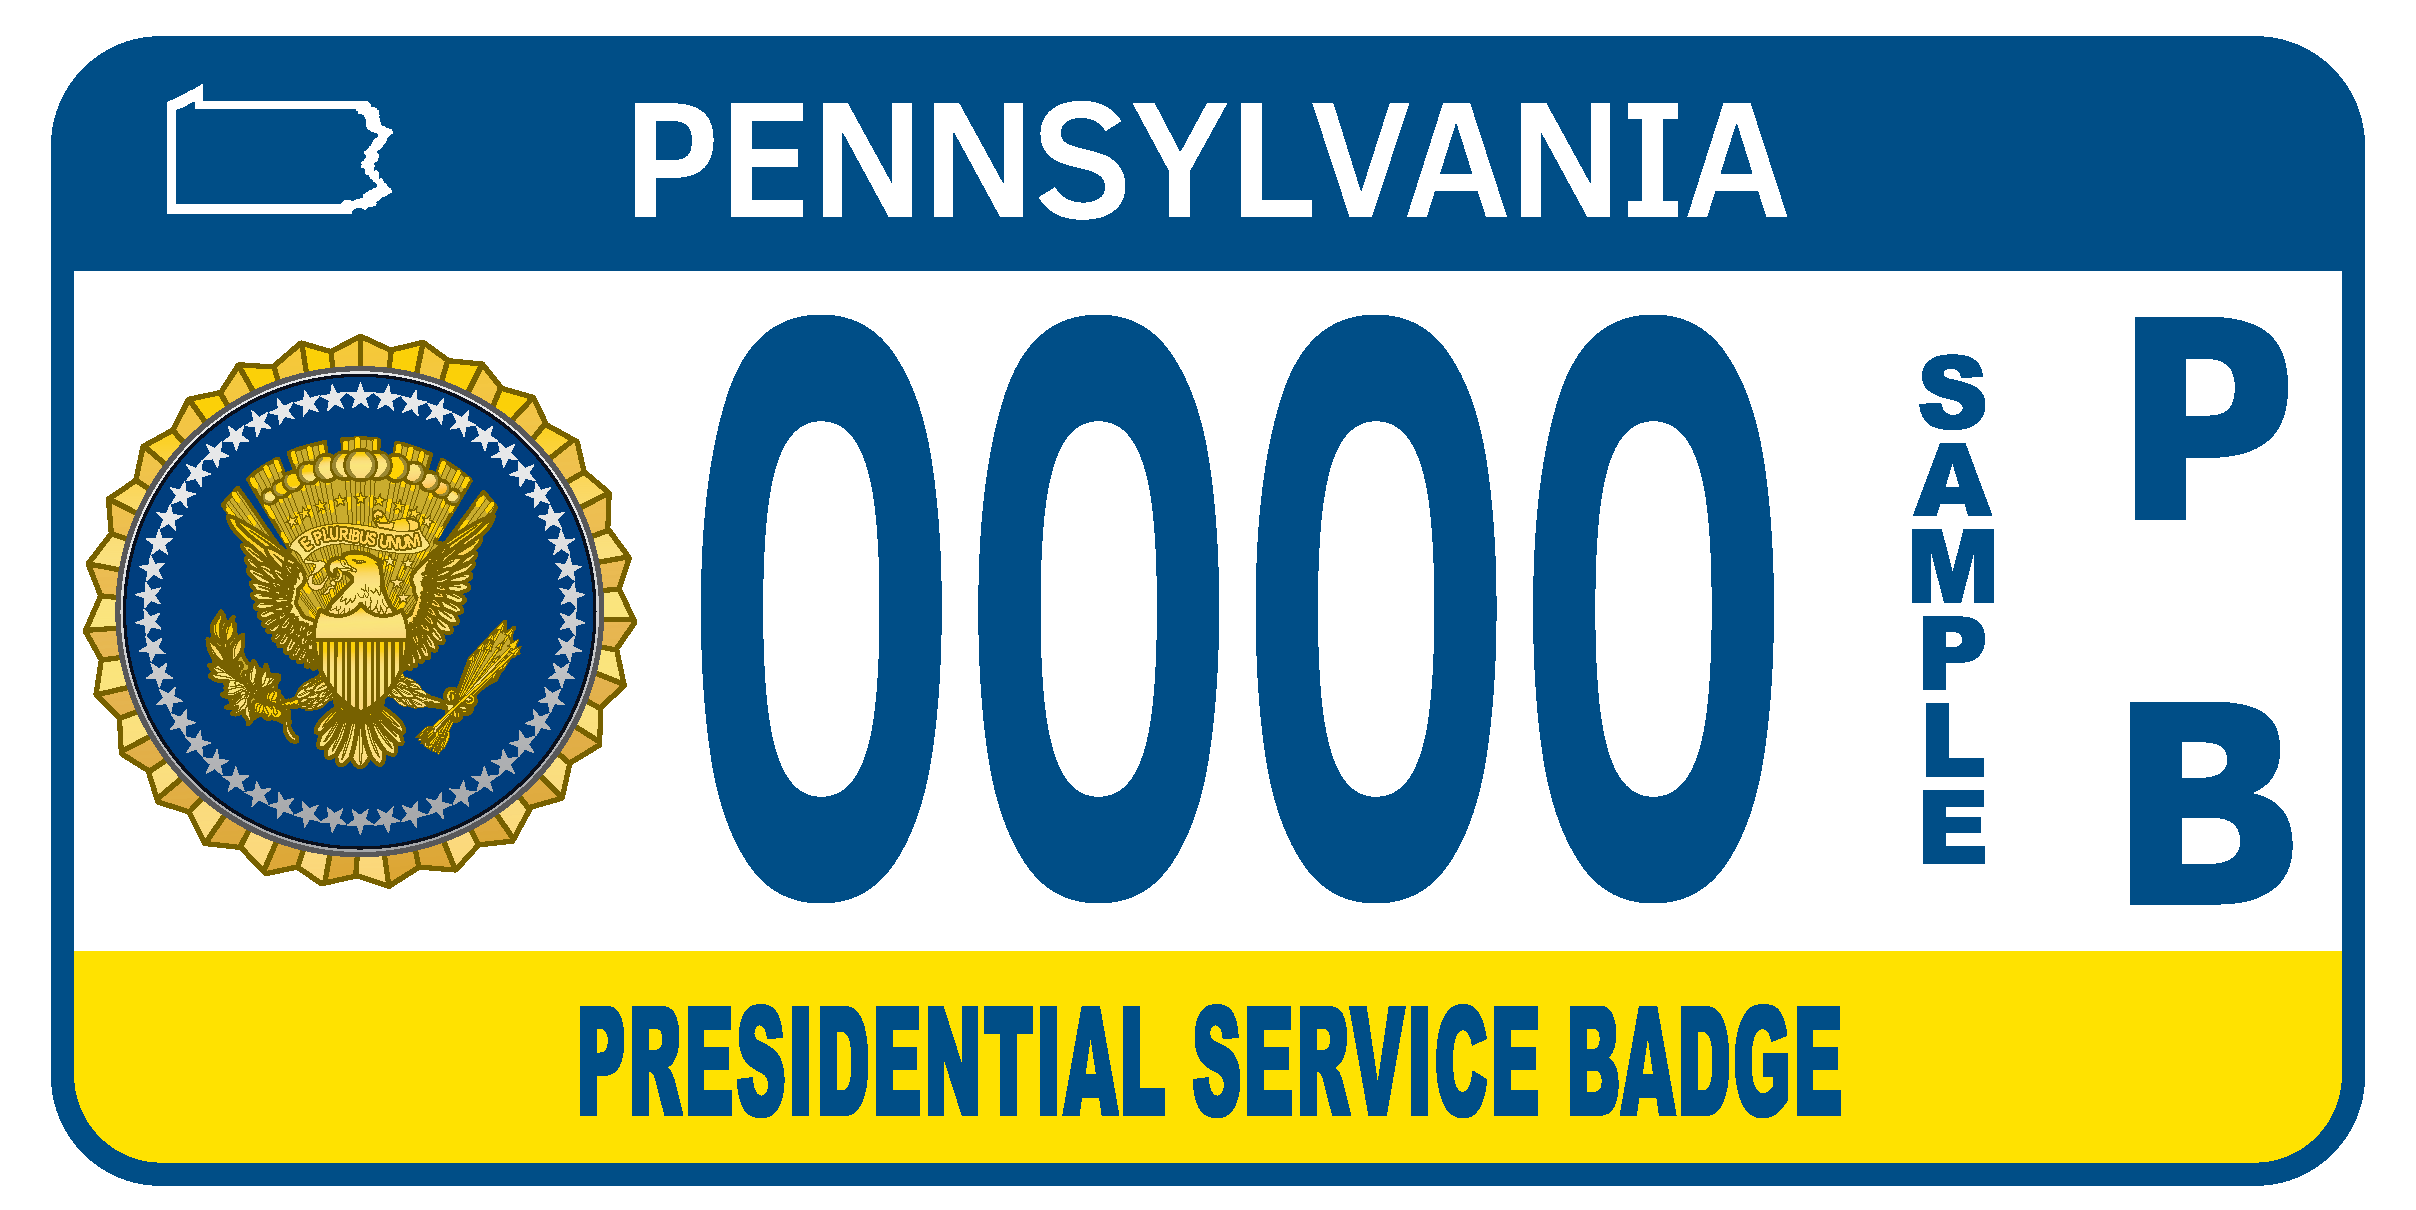 Presidential Service Badge plate